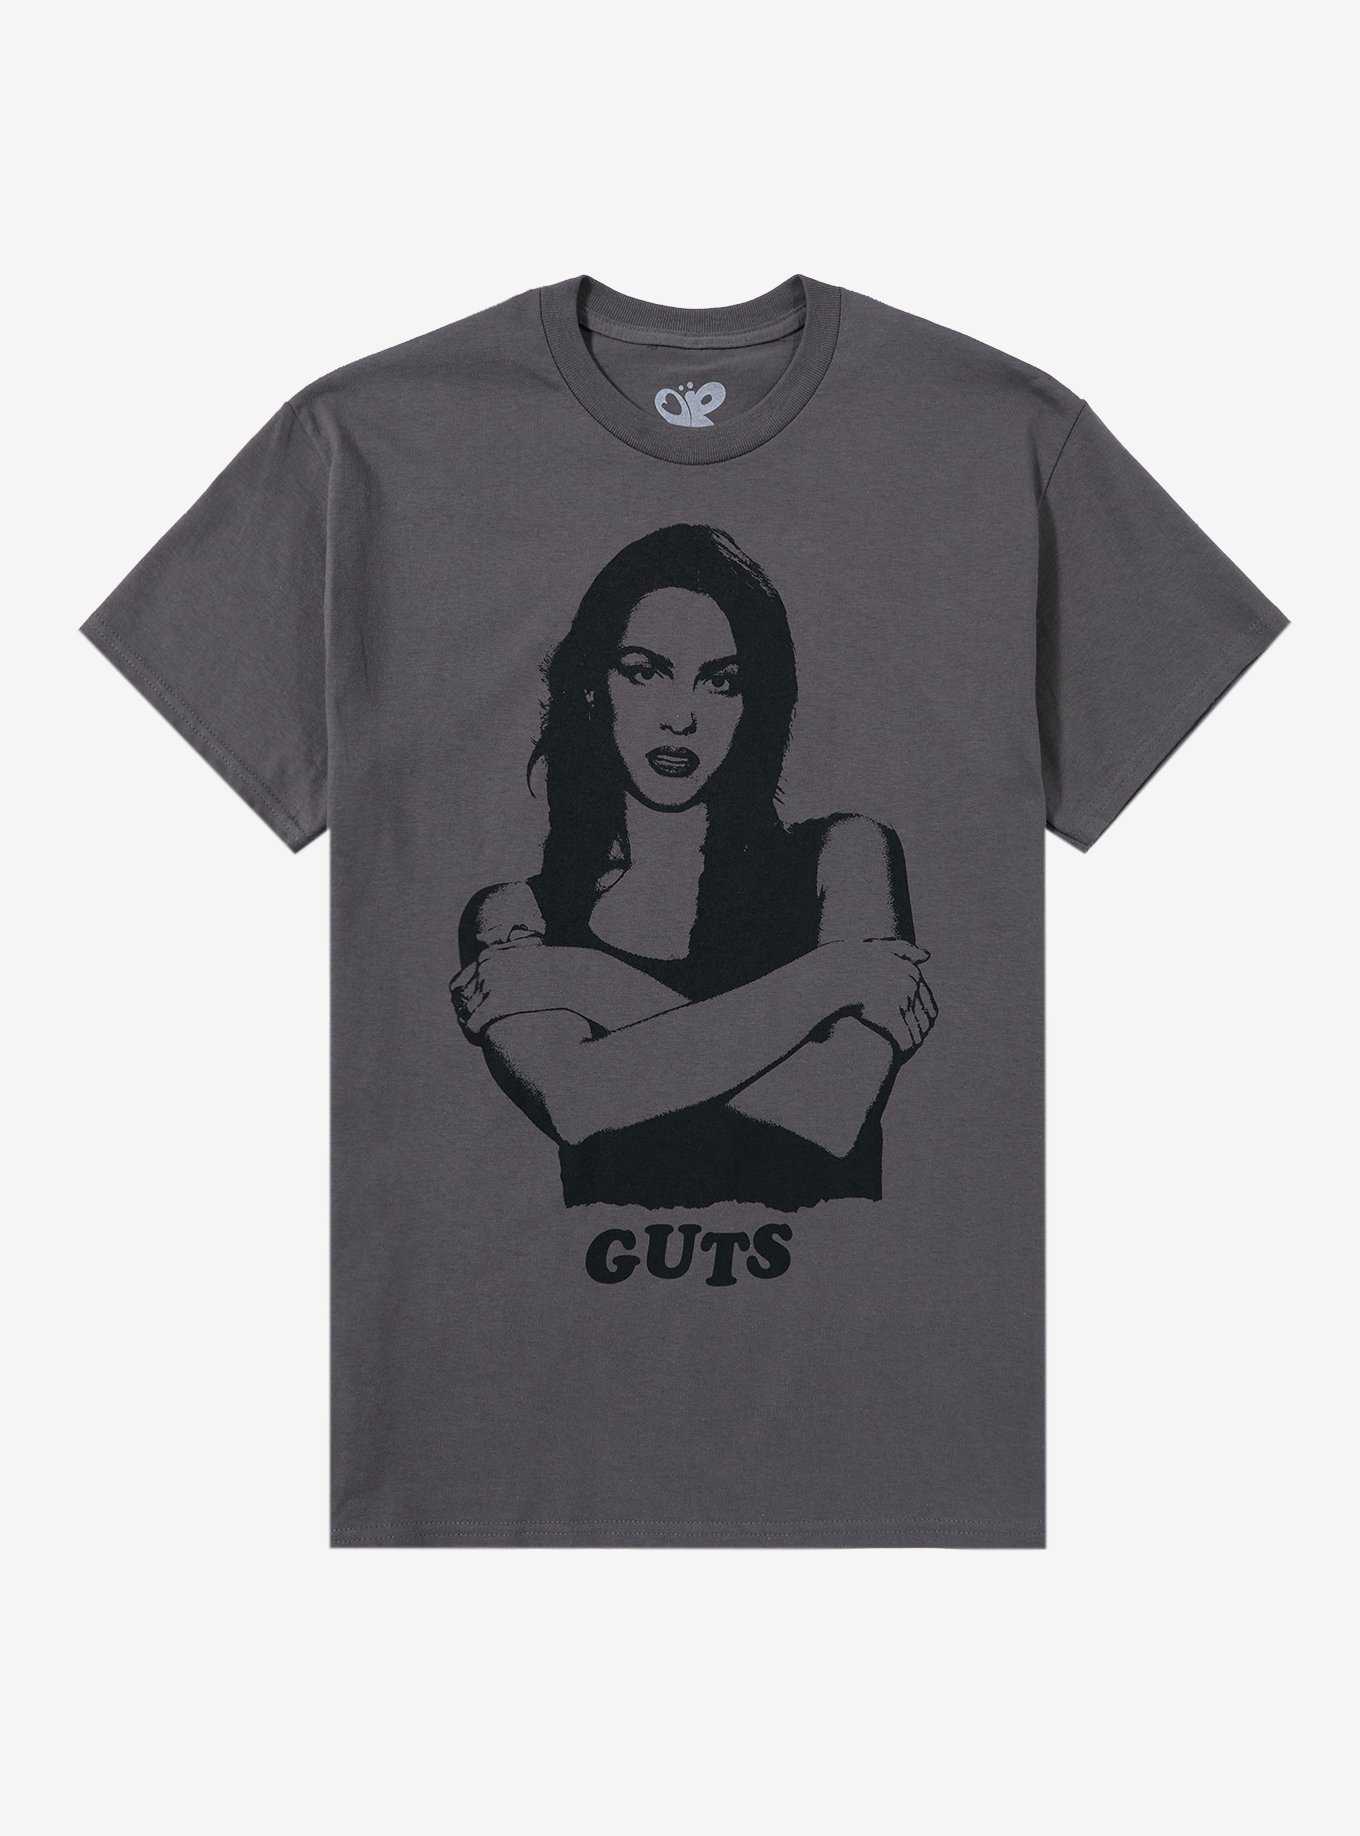 Olivia Rodrigo Sour Grid Boyfriend Fit Girls T-Shirt